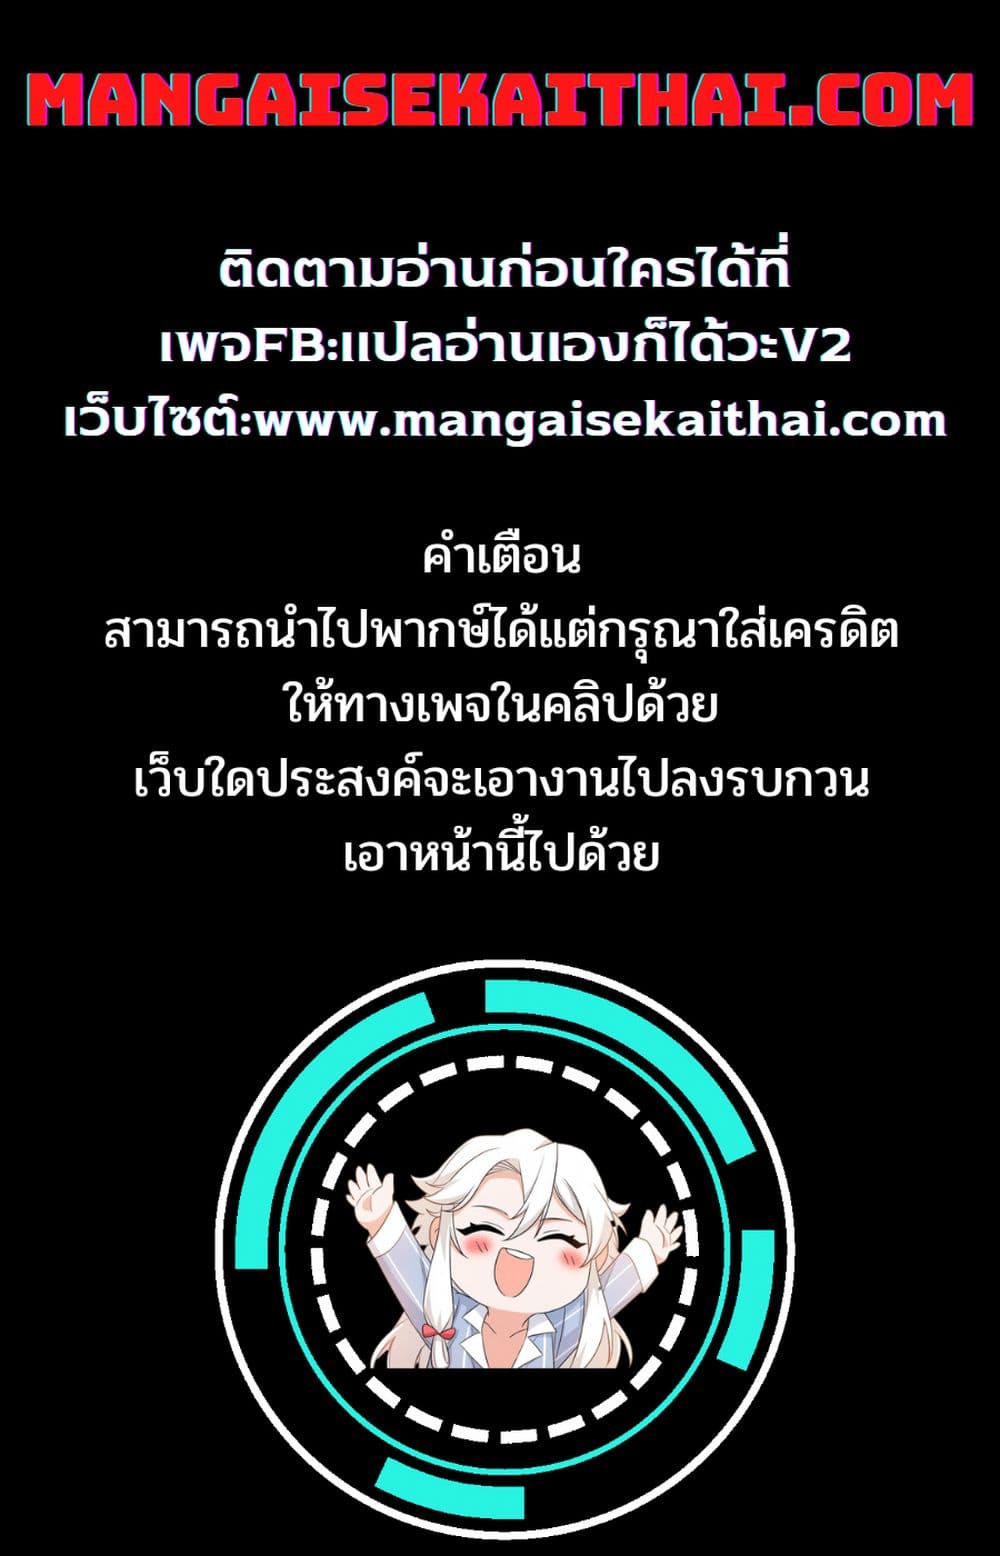 Level 596 no Tanya Minarai 8.4 แปลไทย